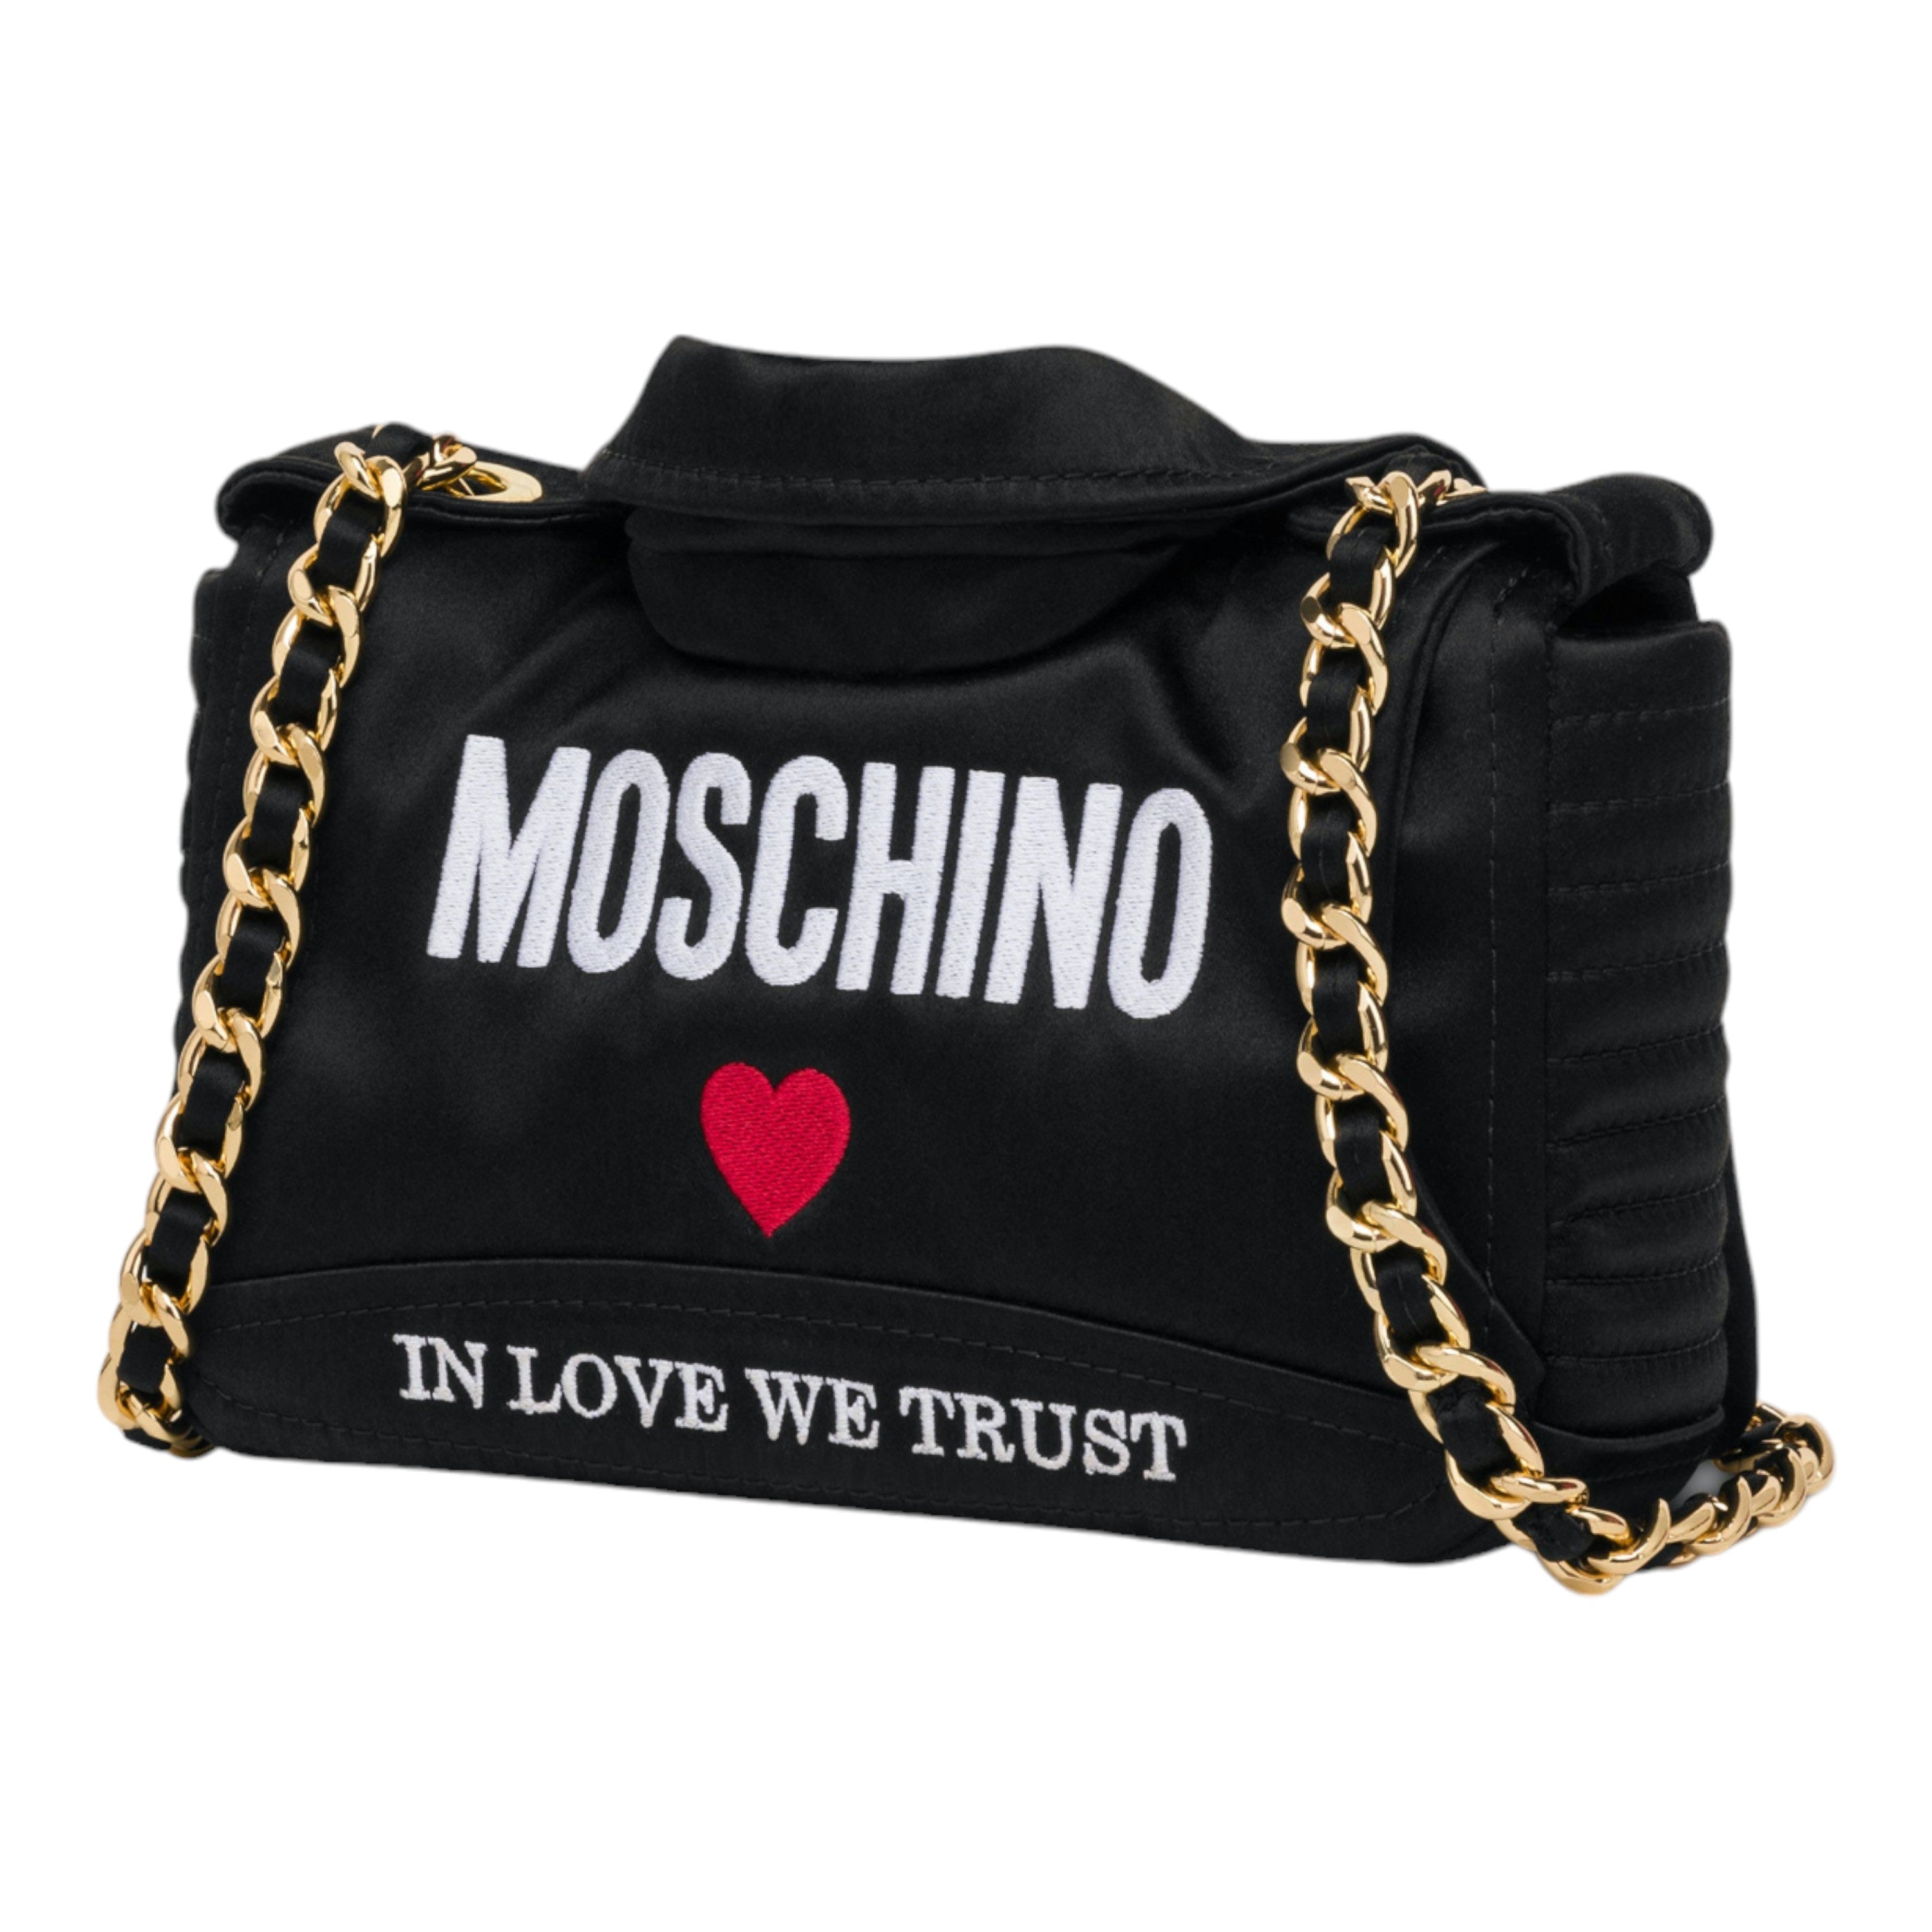 Moschino Satin Biker Bag In Love We Trust